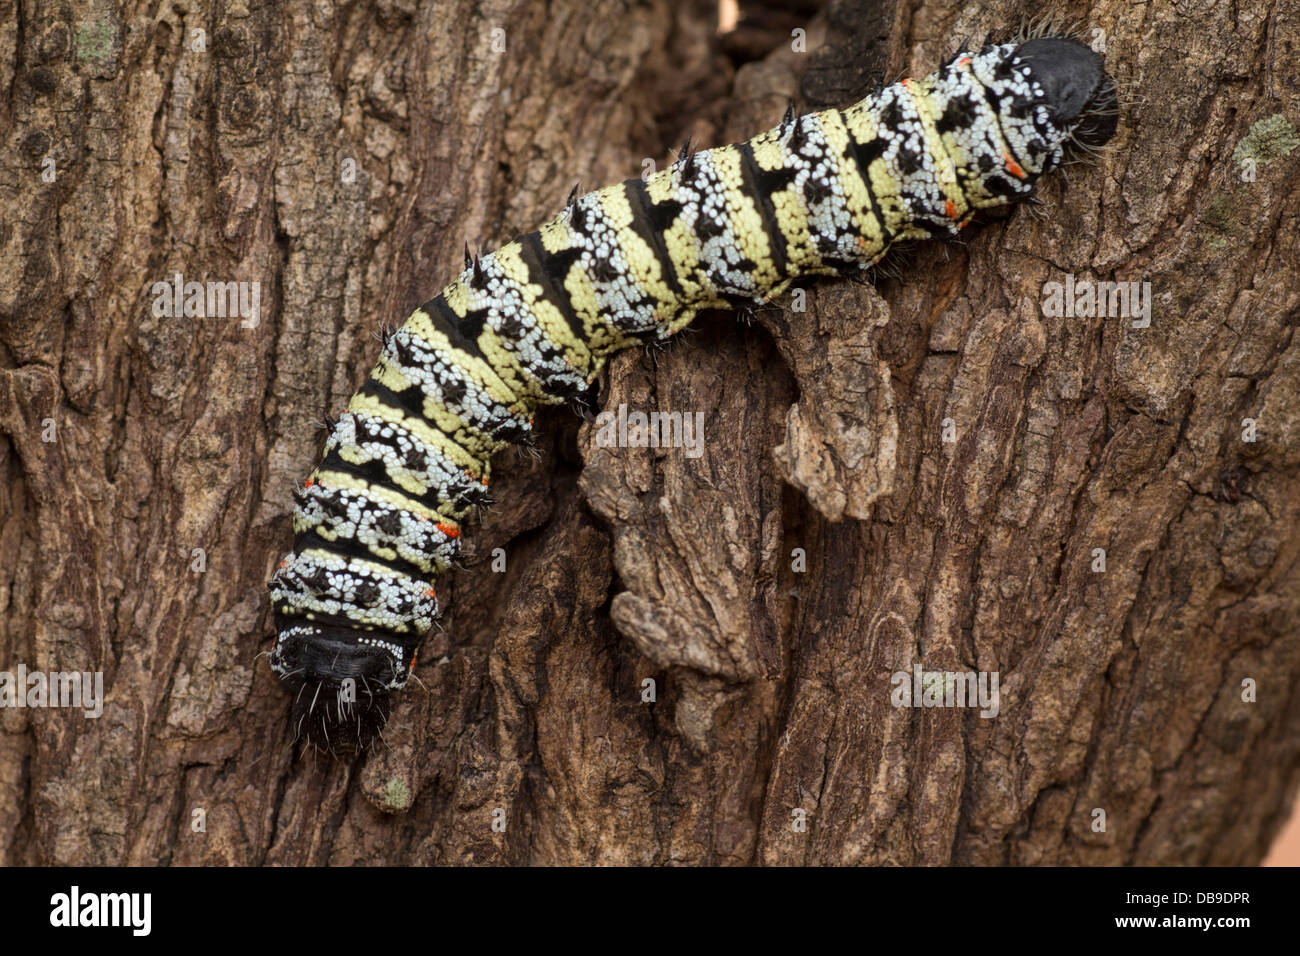 Mopane worm Stock Photo